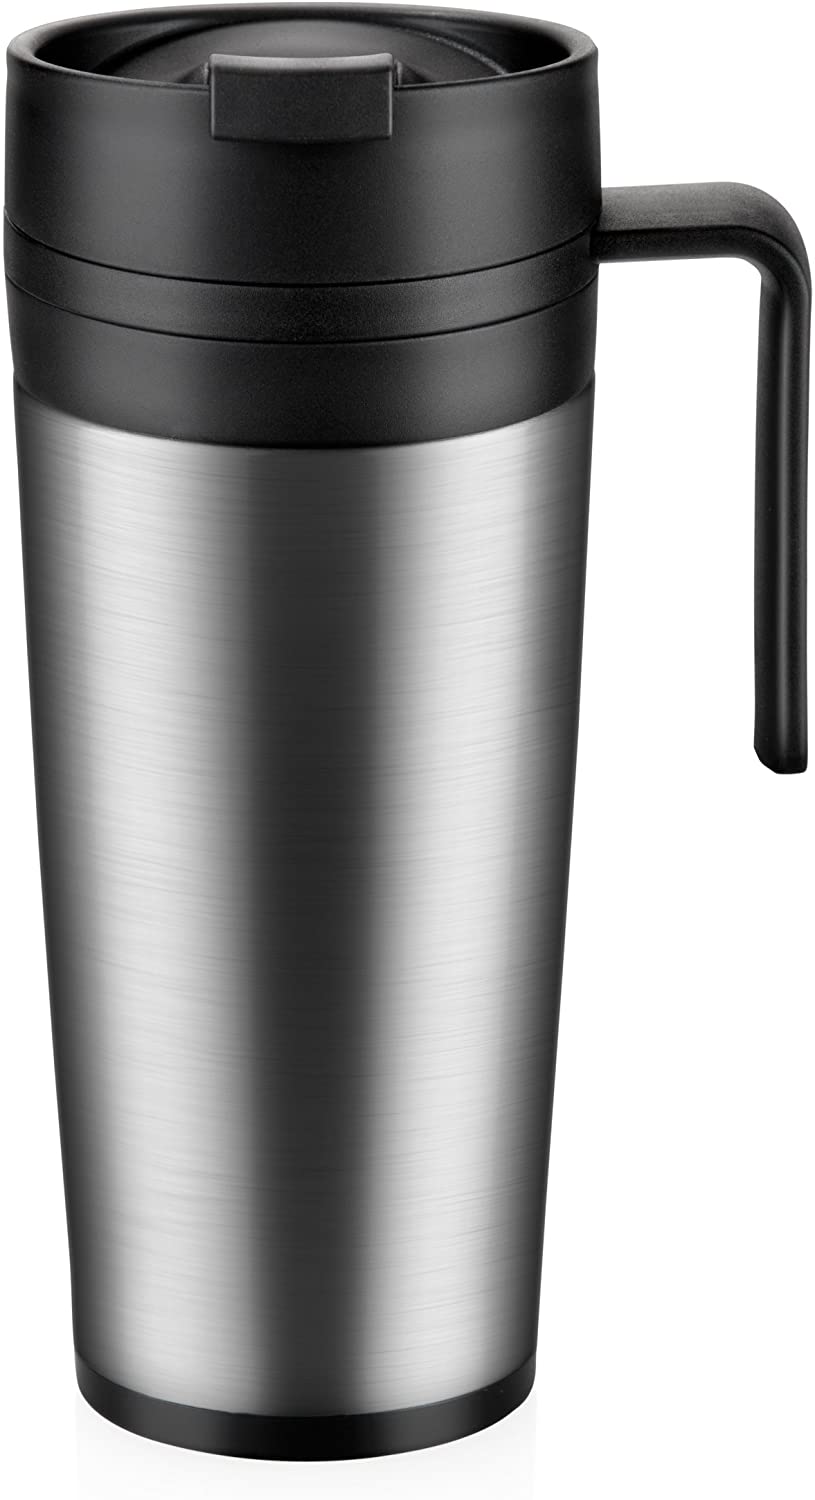 Tescoma Constant 0.4 Litre Travel Mug, Stainless Steel